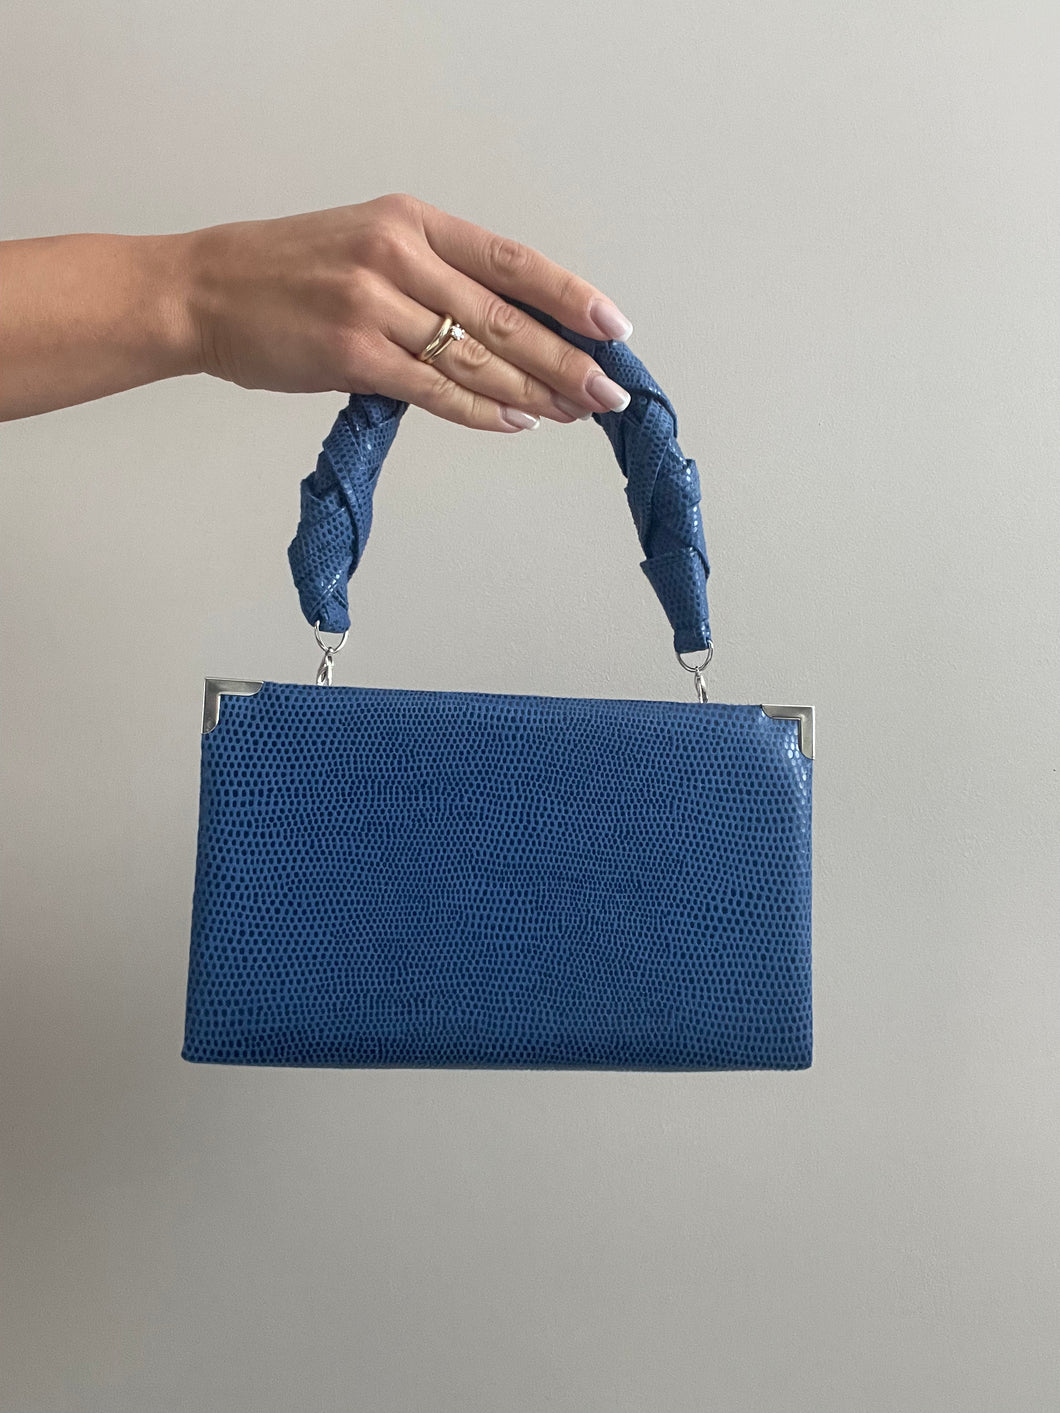 Mini handbag with handle - dark blue version